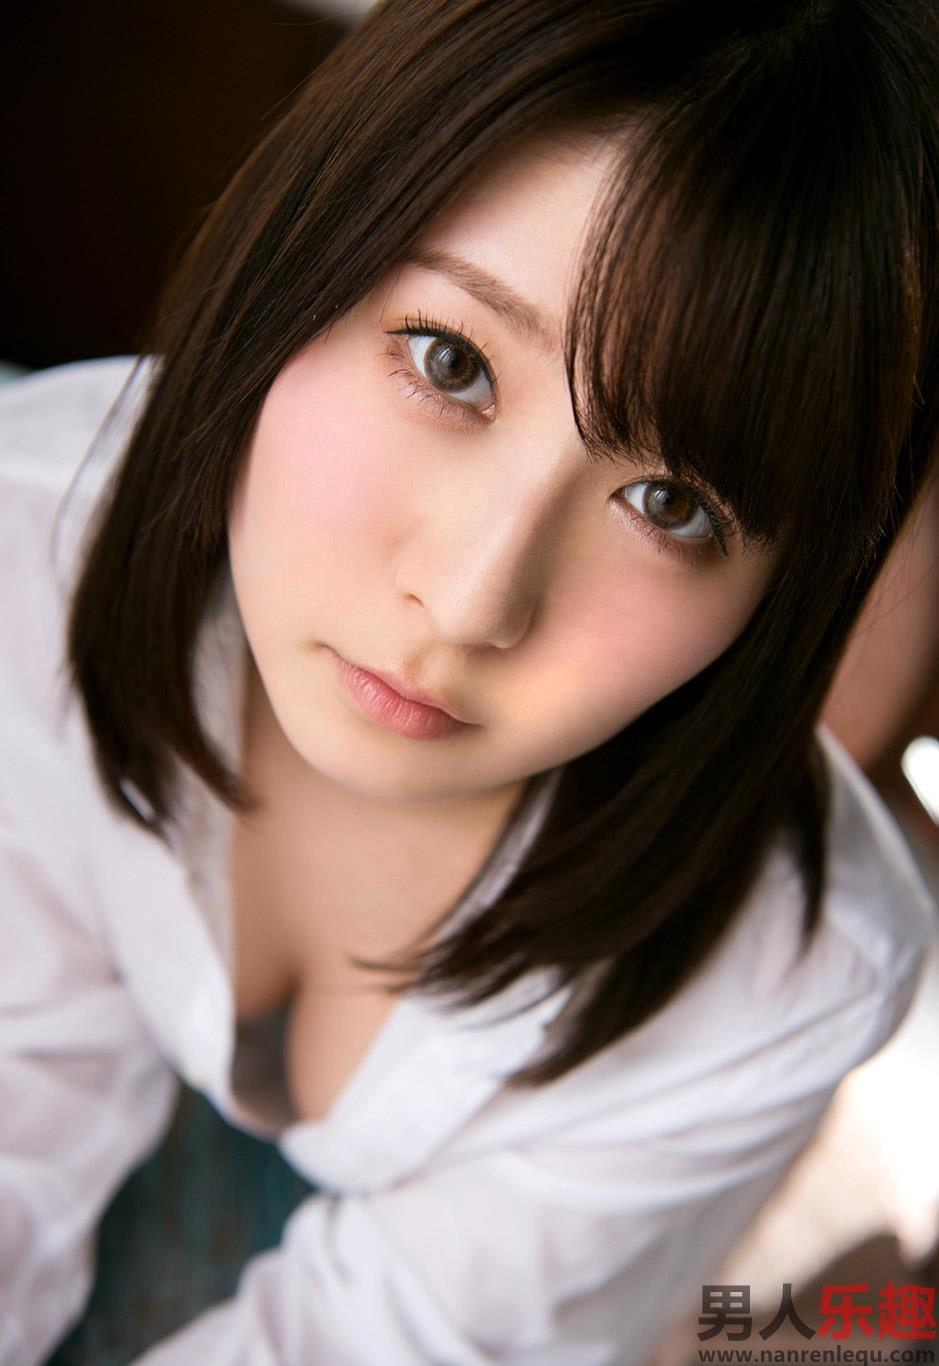 Hot Japanese AV Girls Rin Asuka 飛鳥りん Sexy Photos Gallery 第3张